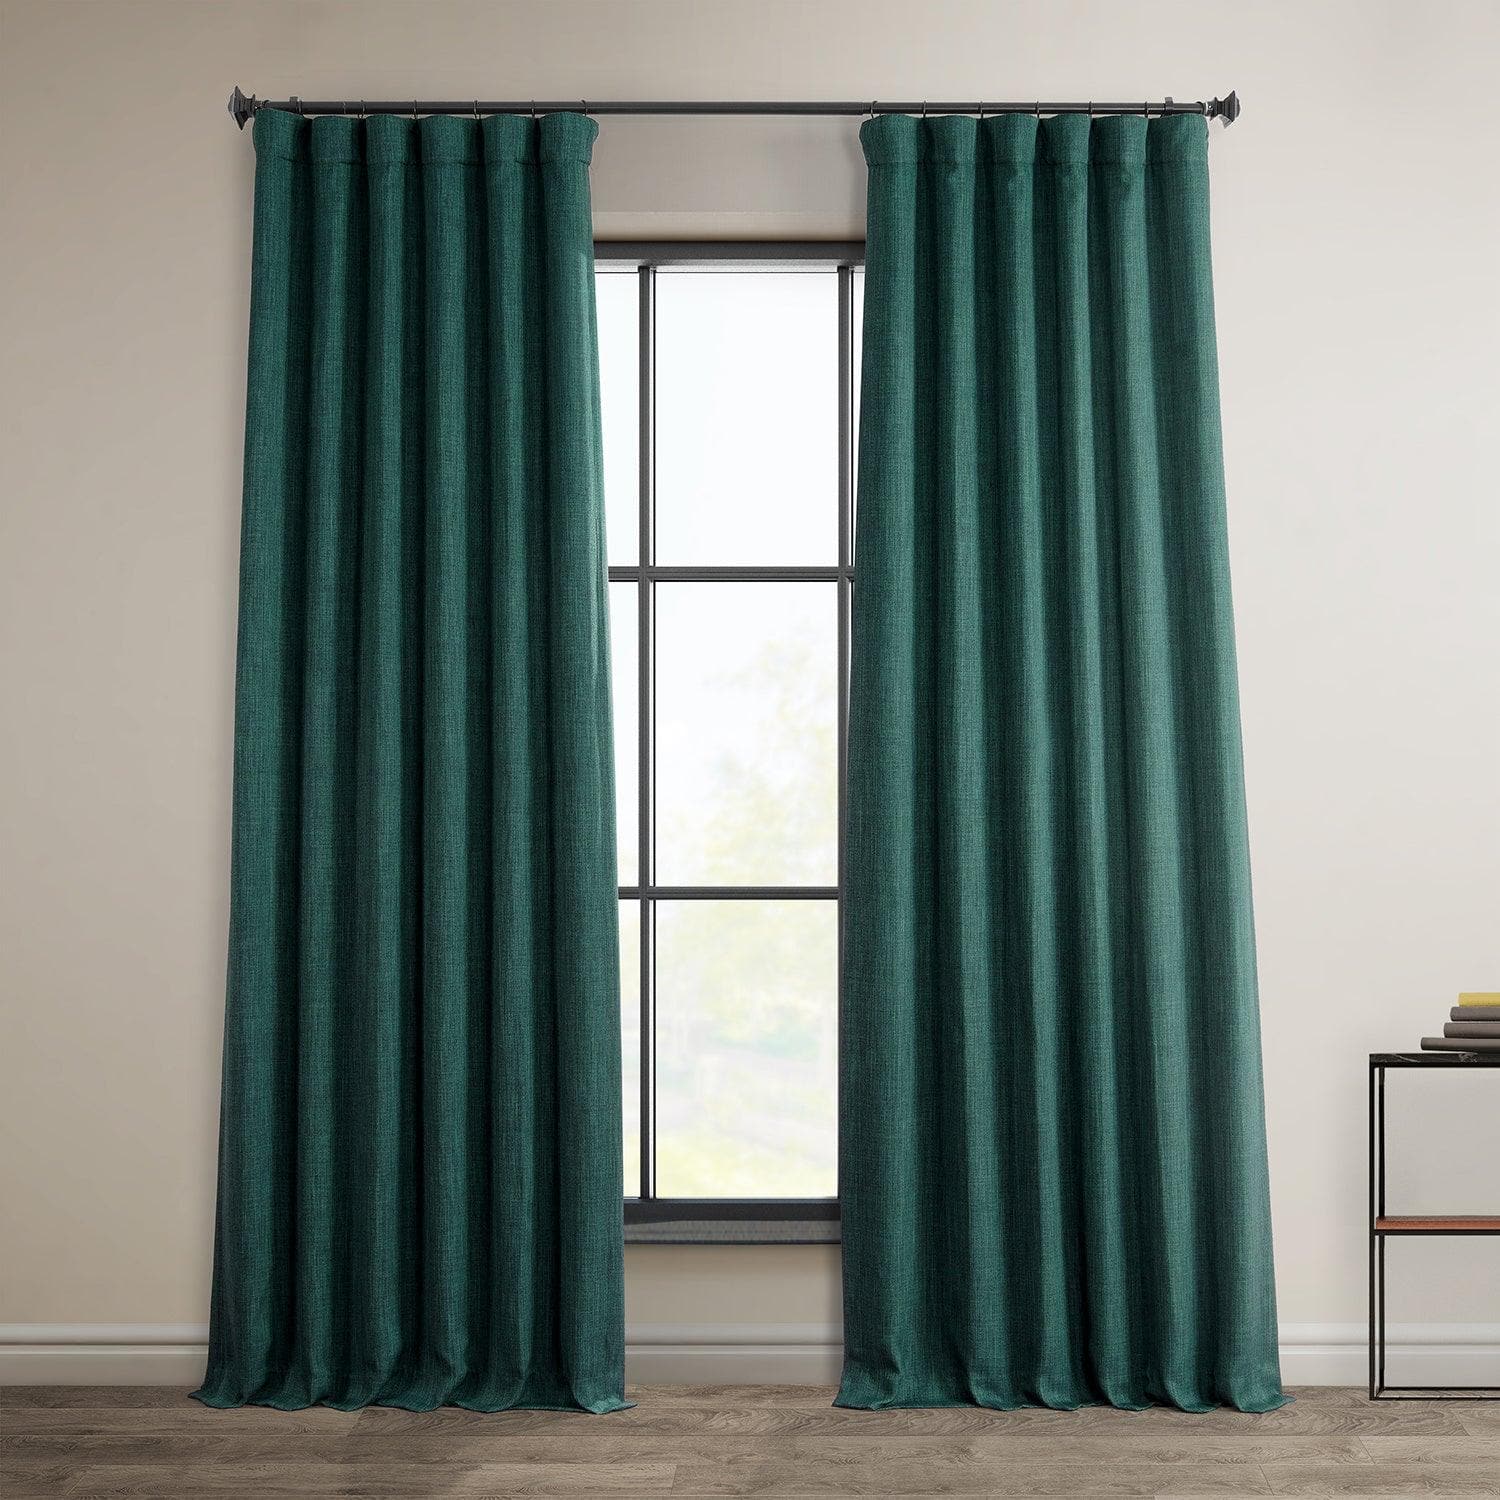 Slate Teal Green Textured Faux Linen Room Darkening Curtain